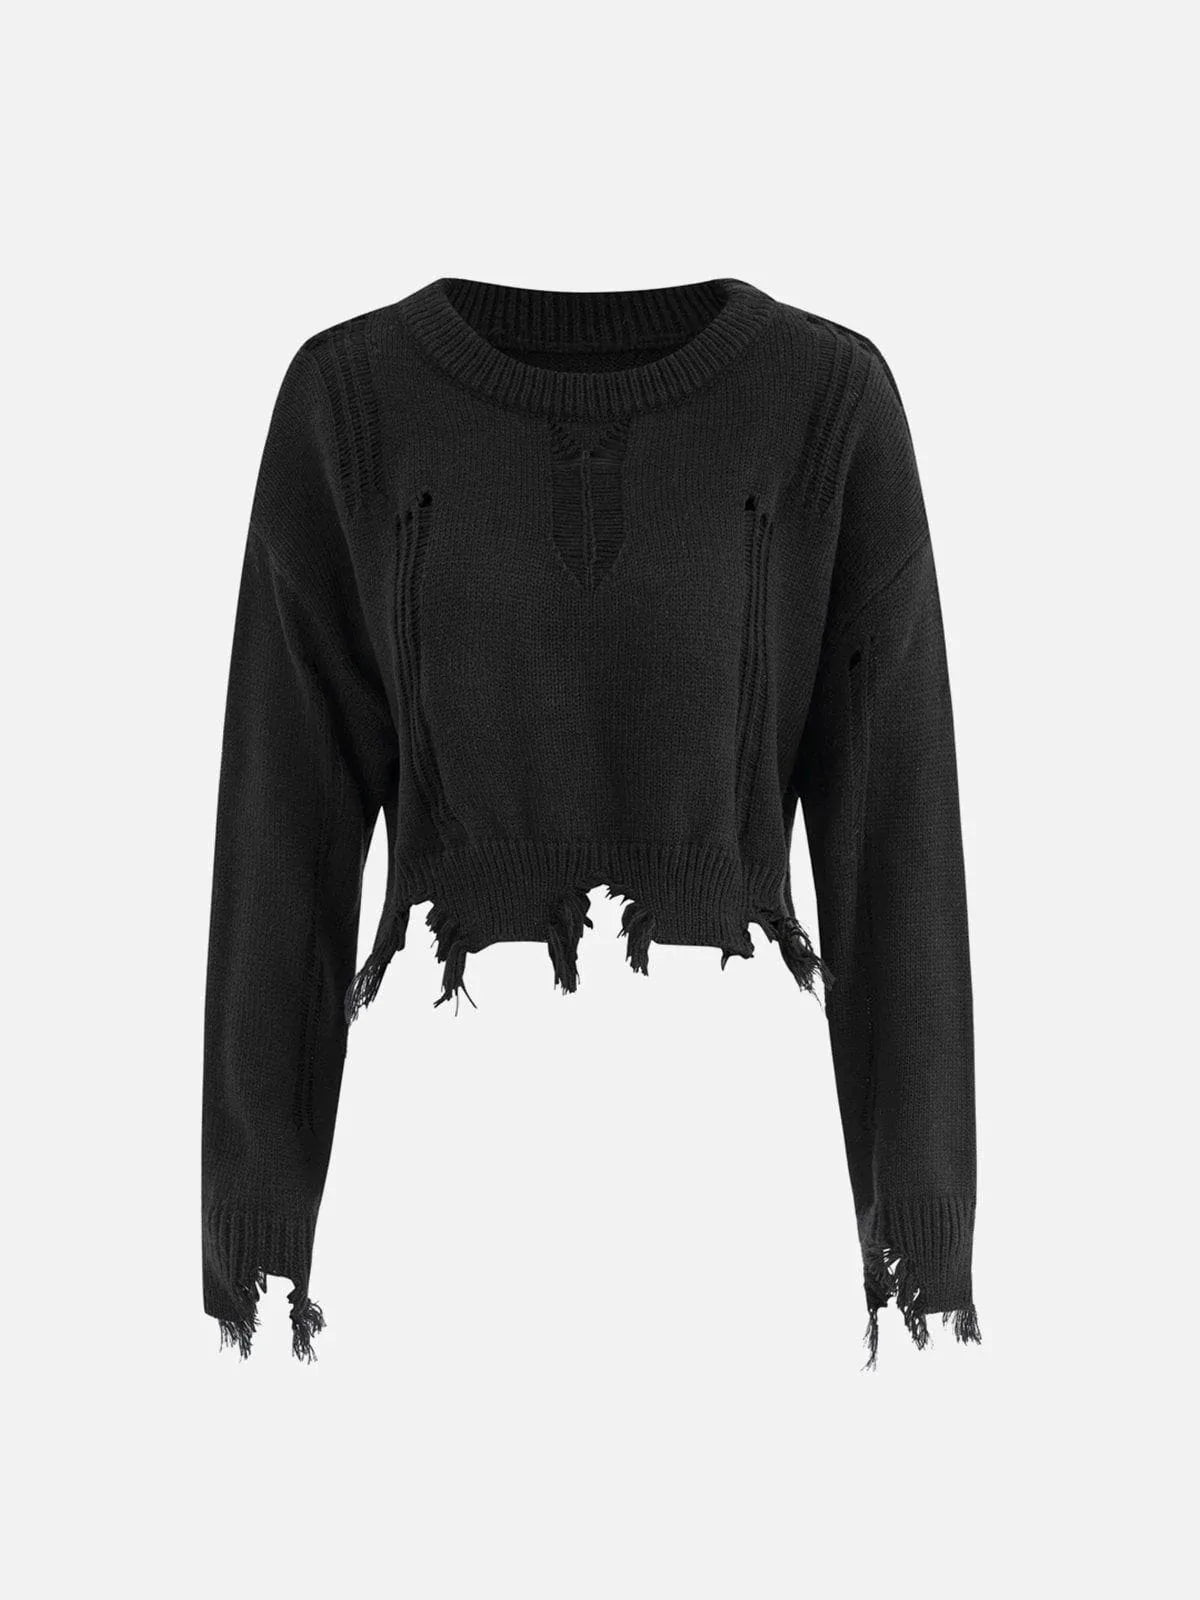 Majesda® - Irregular Hole Sweater outfit ideas streetwear fashion